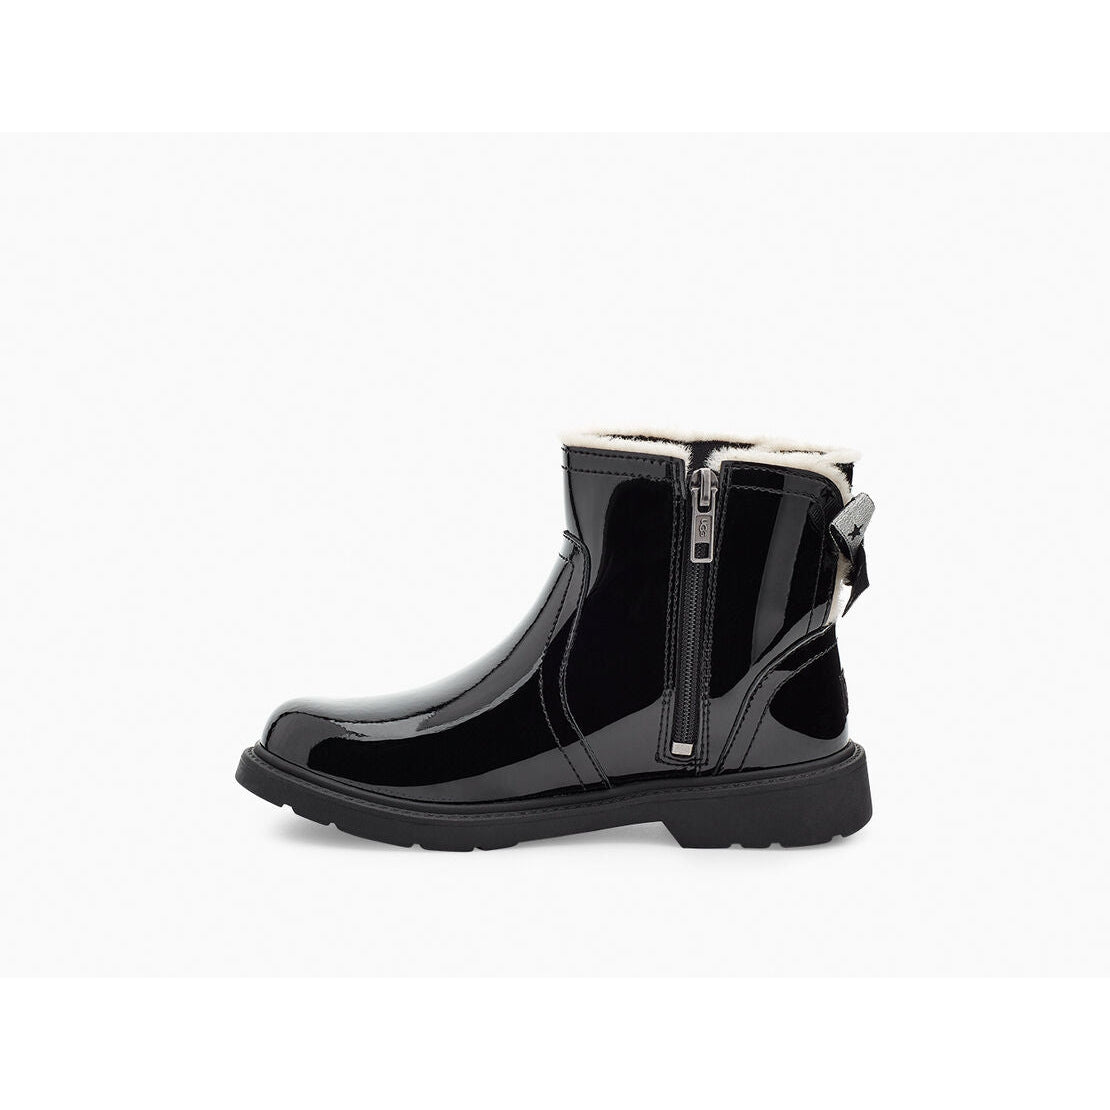 Ugg T Lynde Patent Boots - Size UK 11 - Black - Pristine